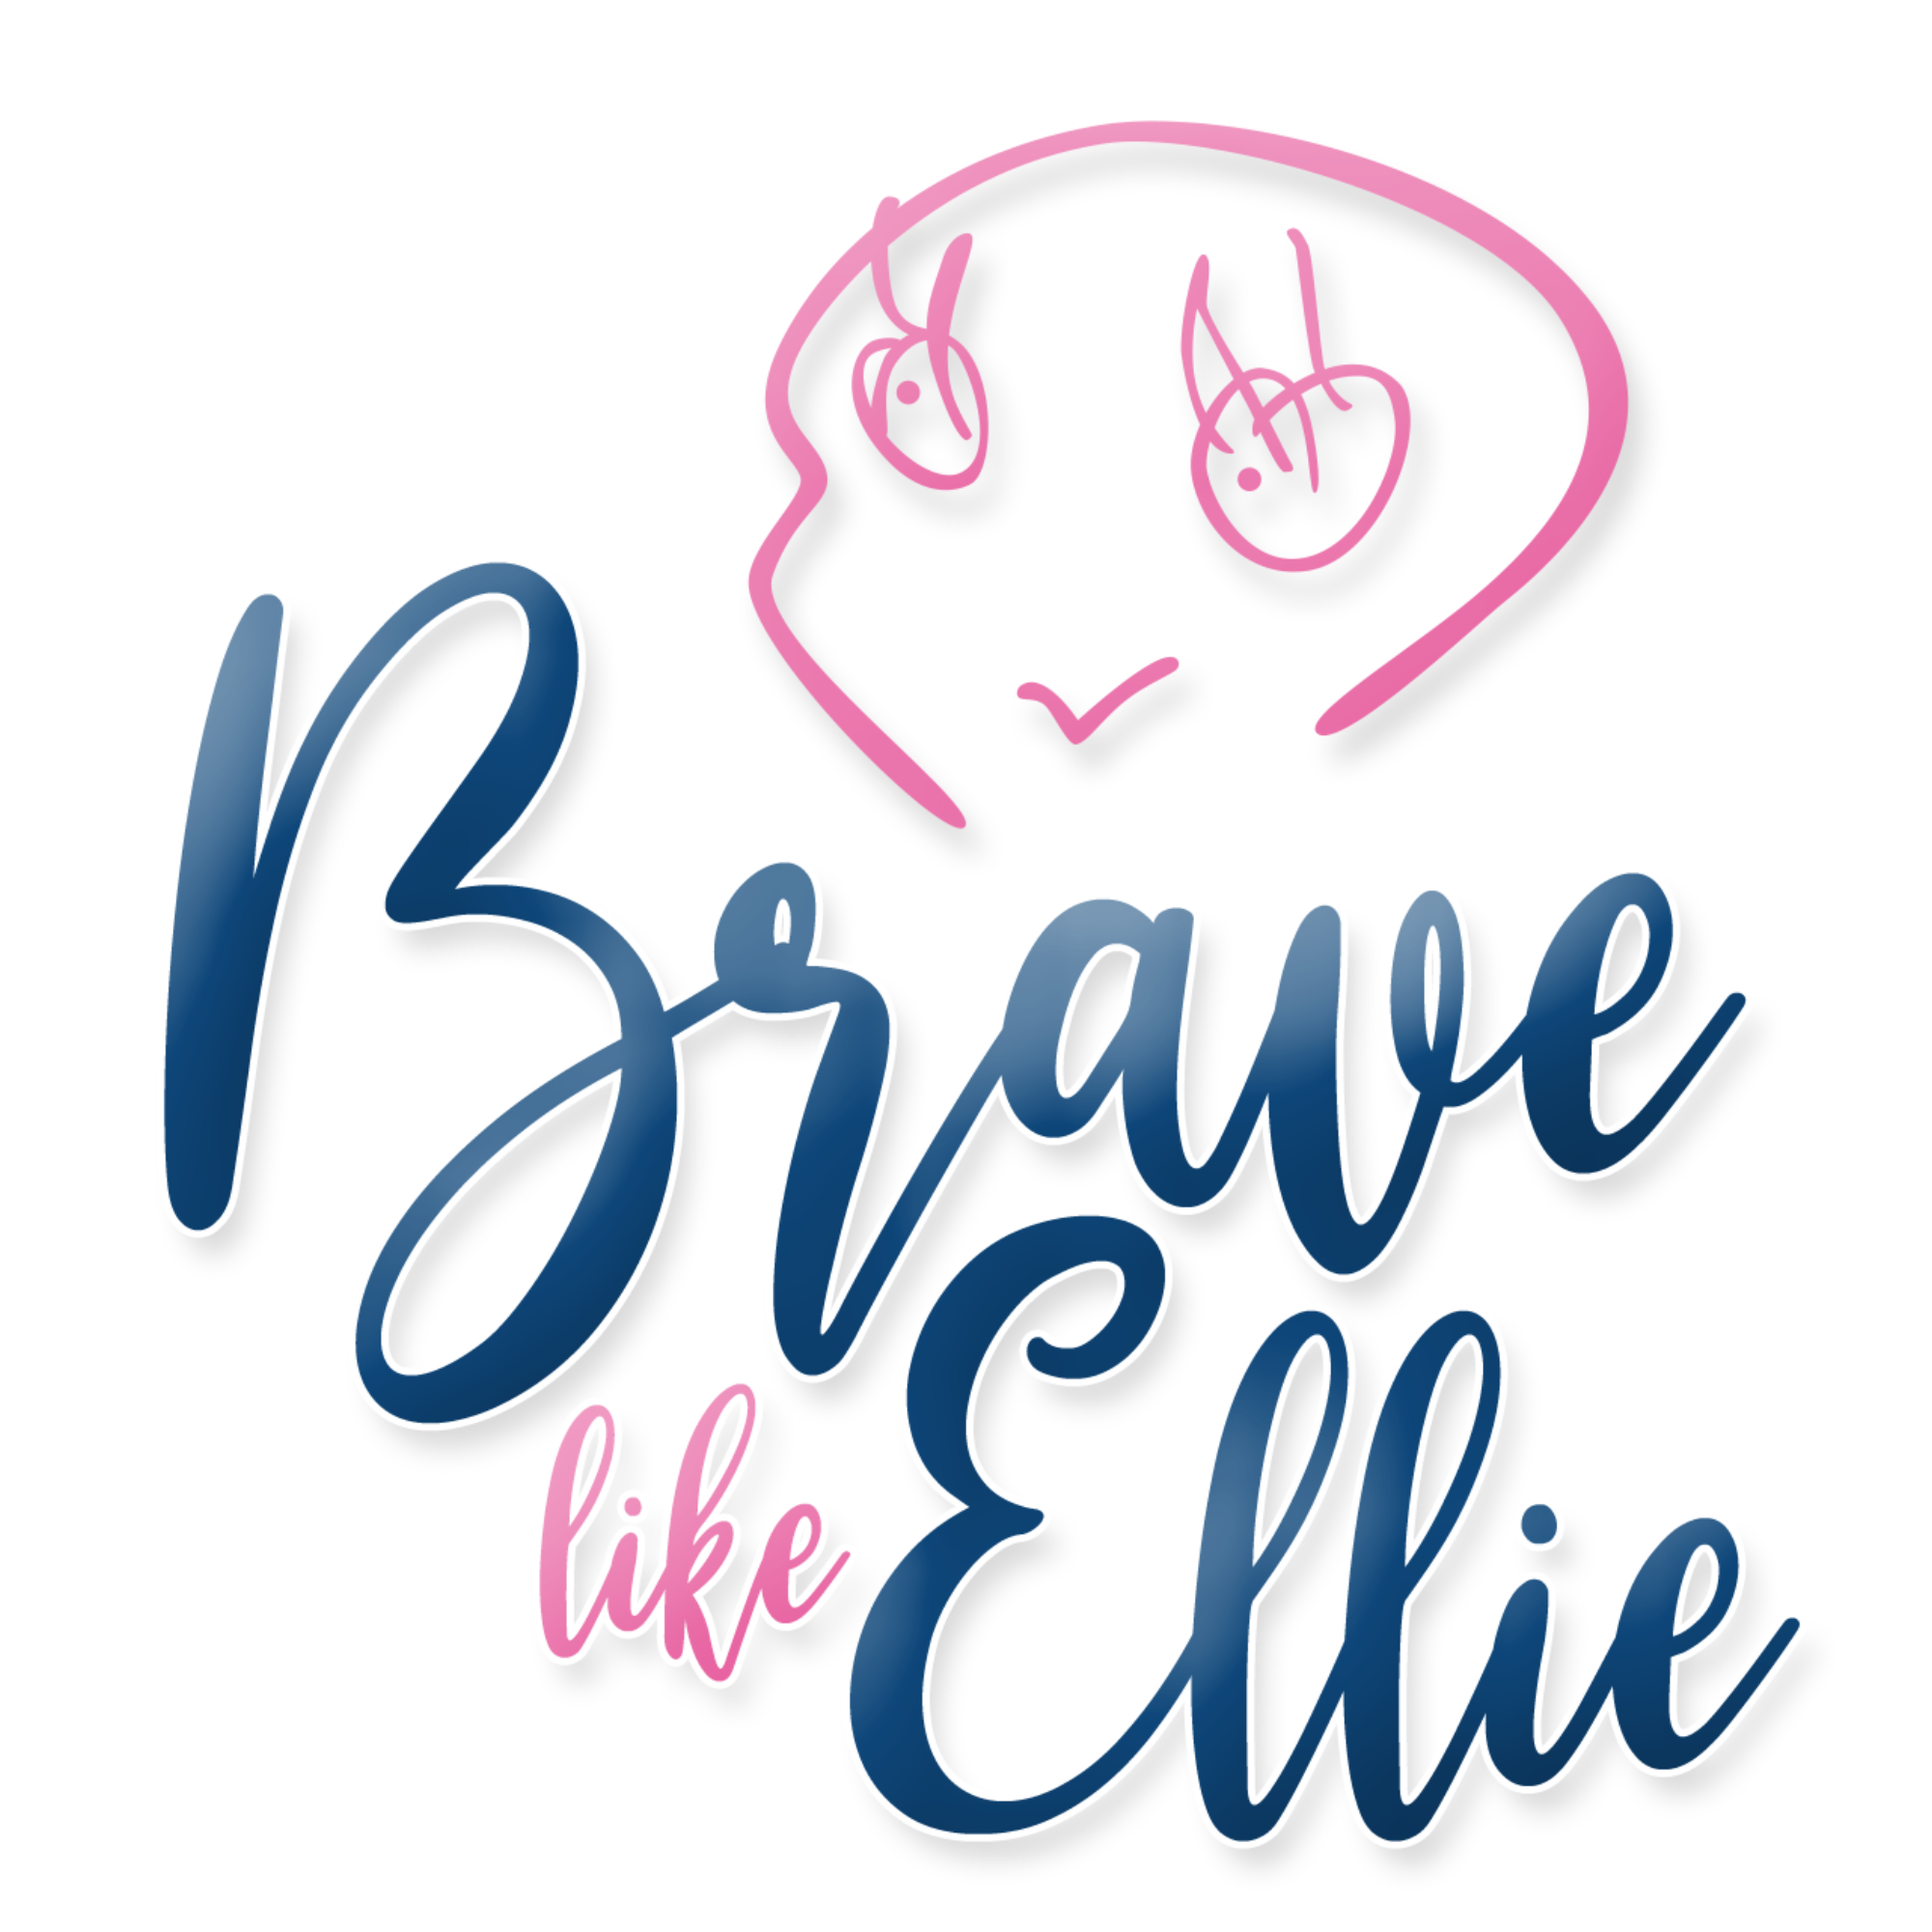 Brave Like Ellie